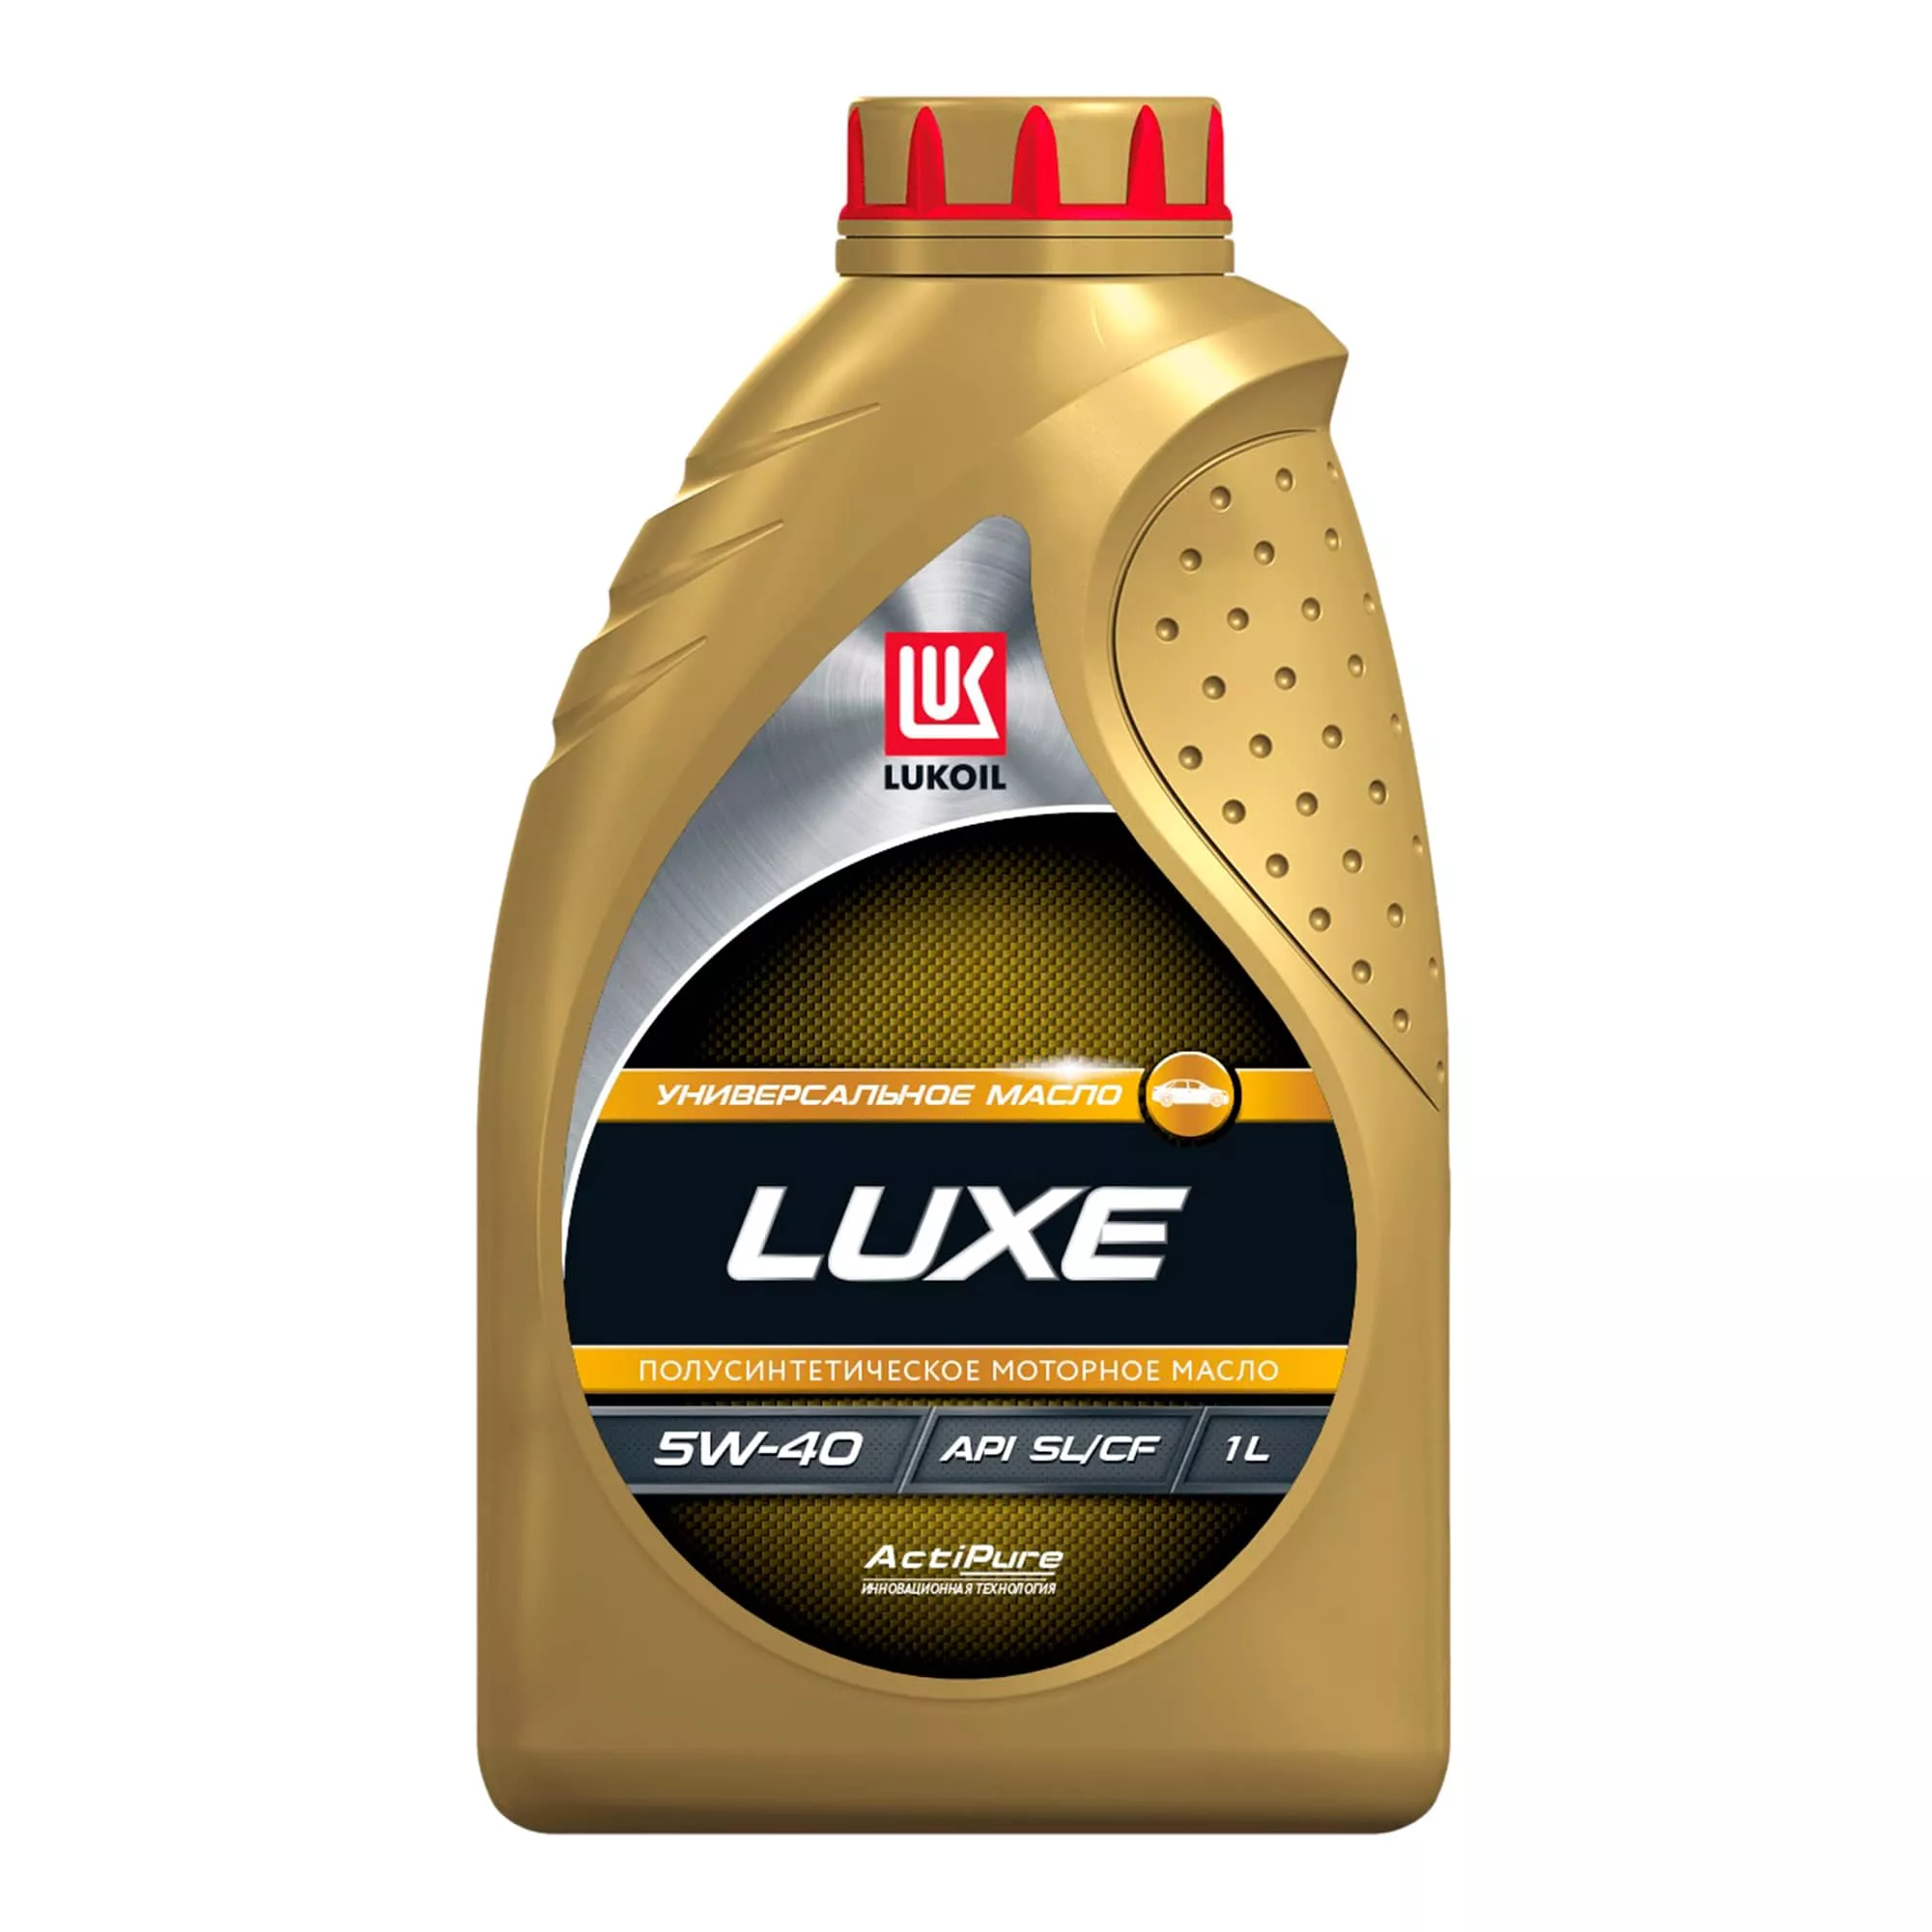 Масло Lux 5W-40 1л SL/CF